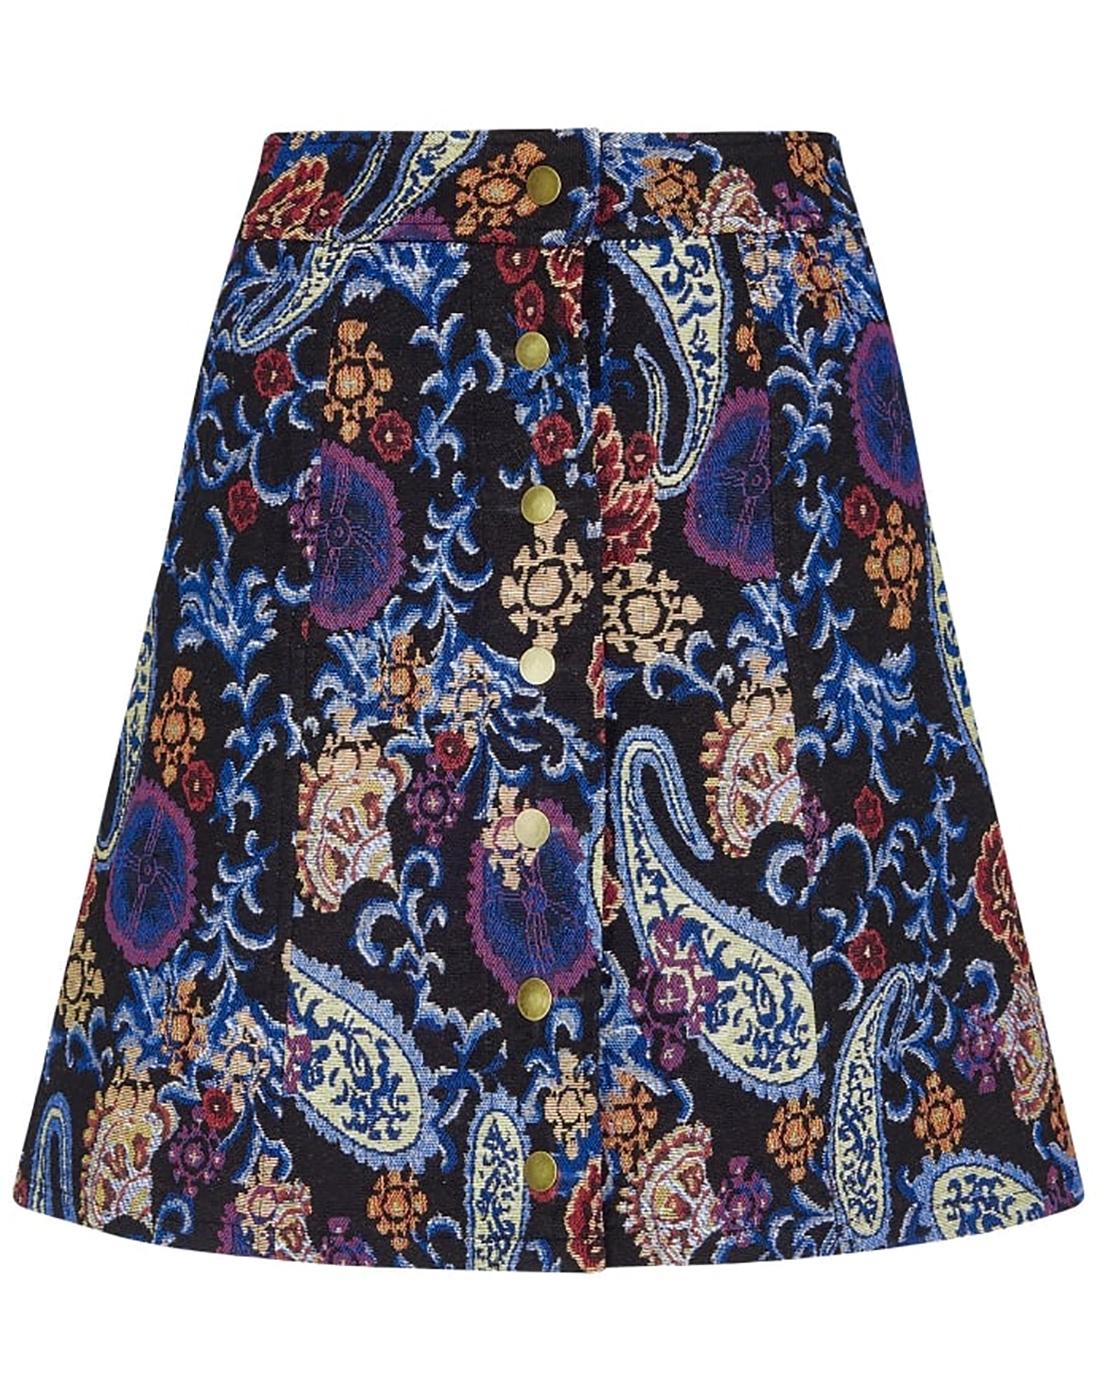 BRIGHT AND BEAUTIFUL India Retro 60s Mod Paisley Mini Skirt